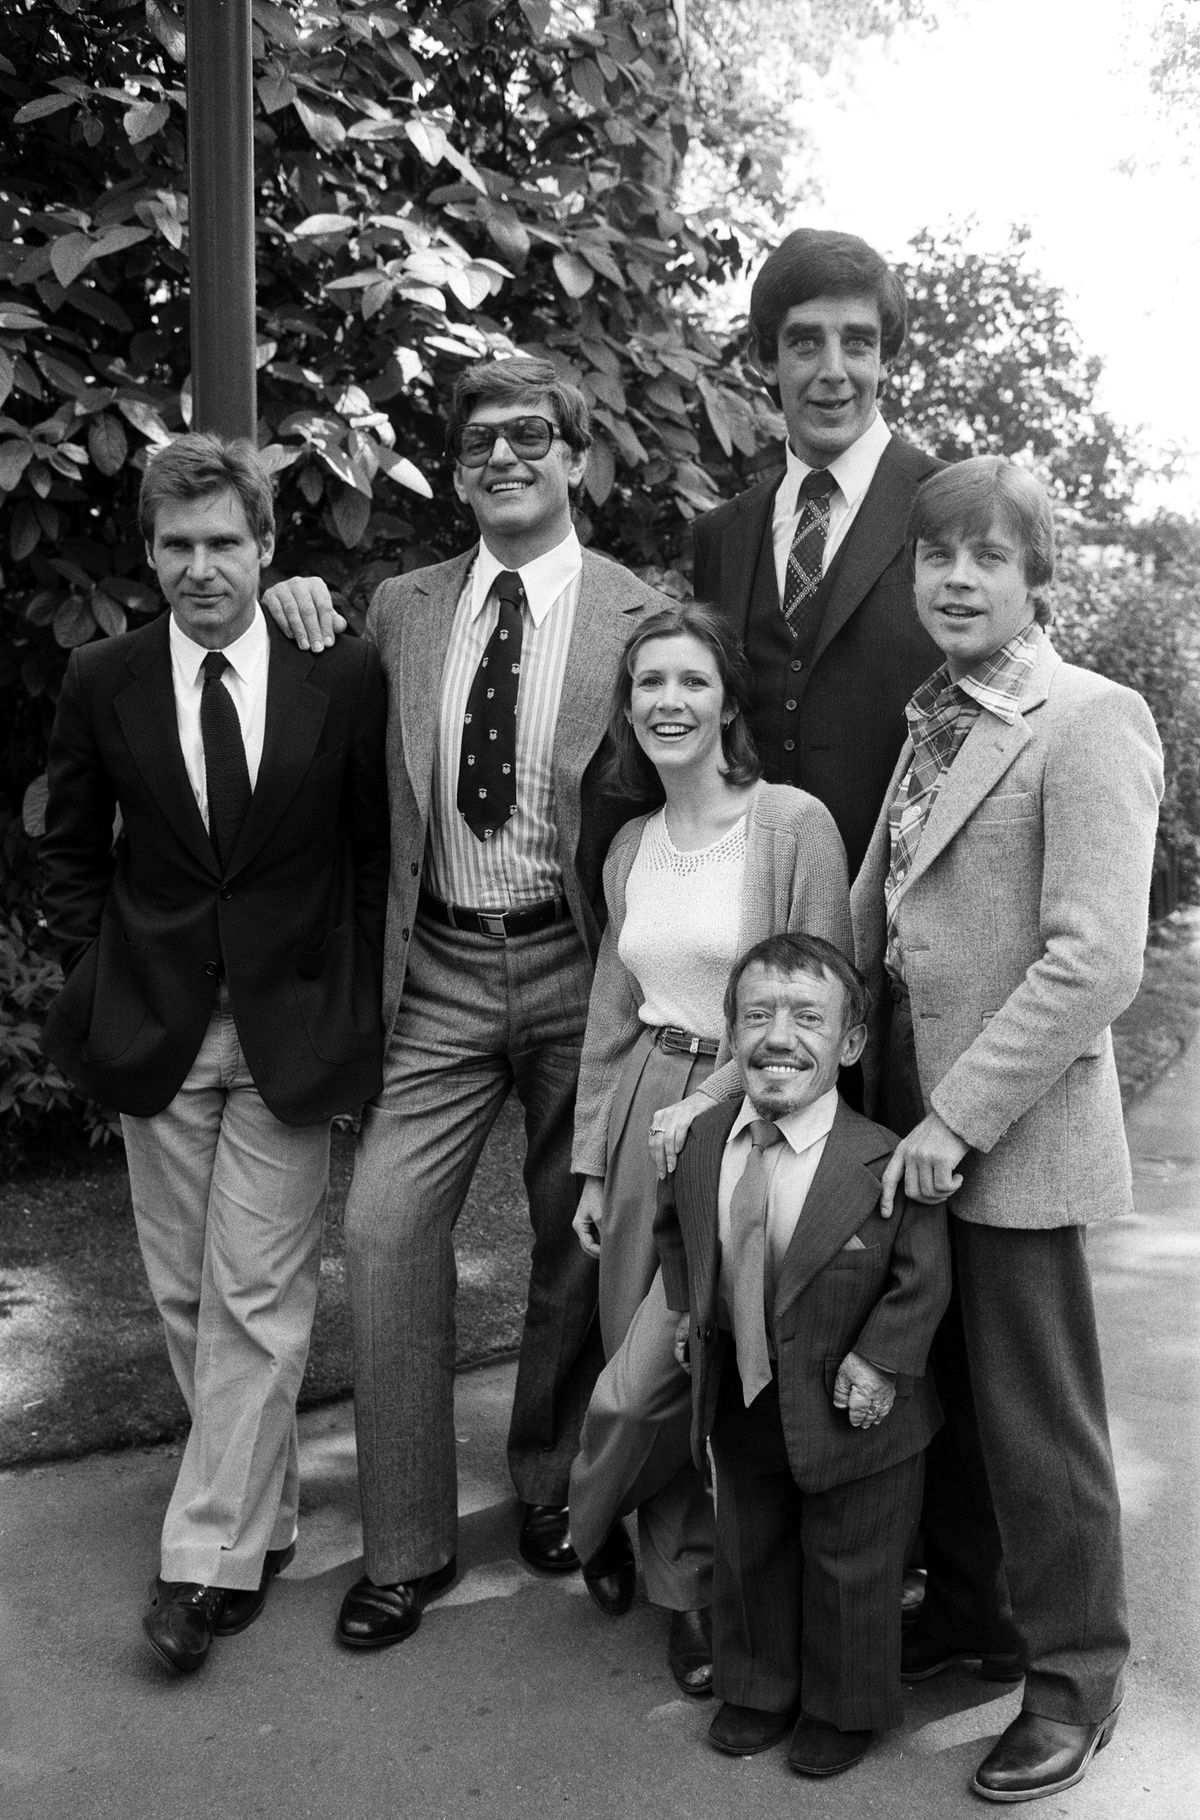 A birodalom visszavág nagyjai 1980 májusában: Harrison Ford, David Prowse, Carrie Fisher,  Kenny Baker, Peter Mayhew, Mark Hamill<br>FOTÓ: ALISDAIR MACDONALD / DAILY MIRROR/MIRRORPIX / GETTY IMAGES